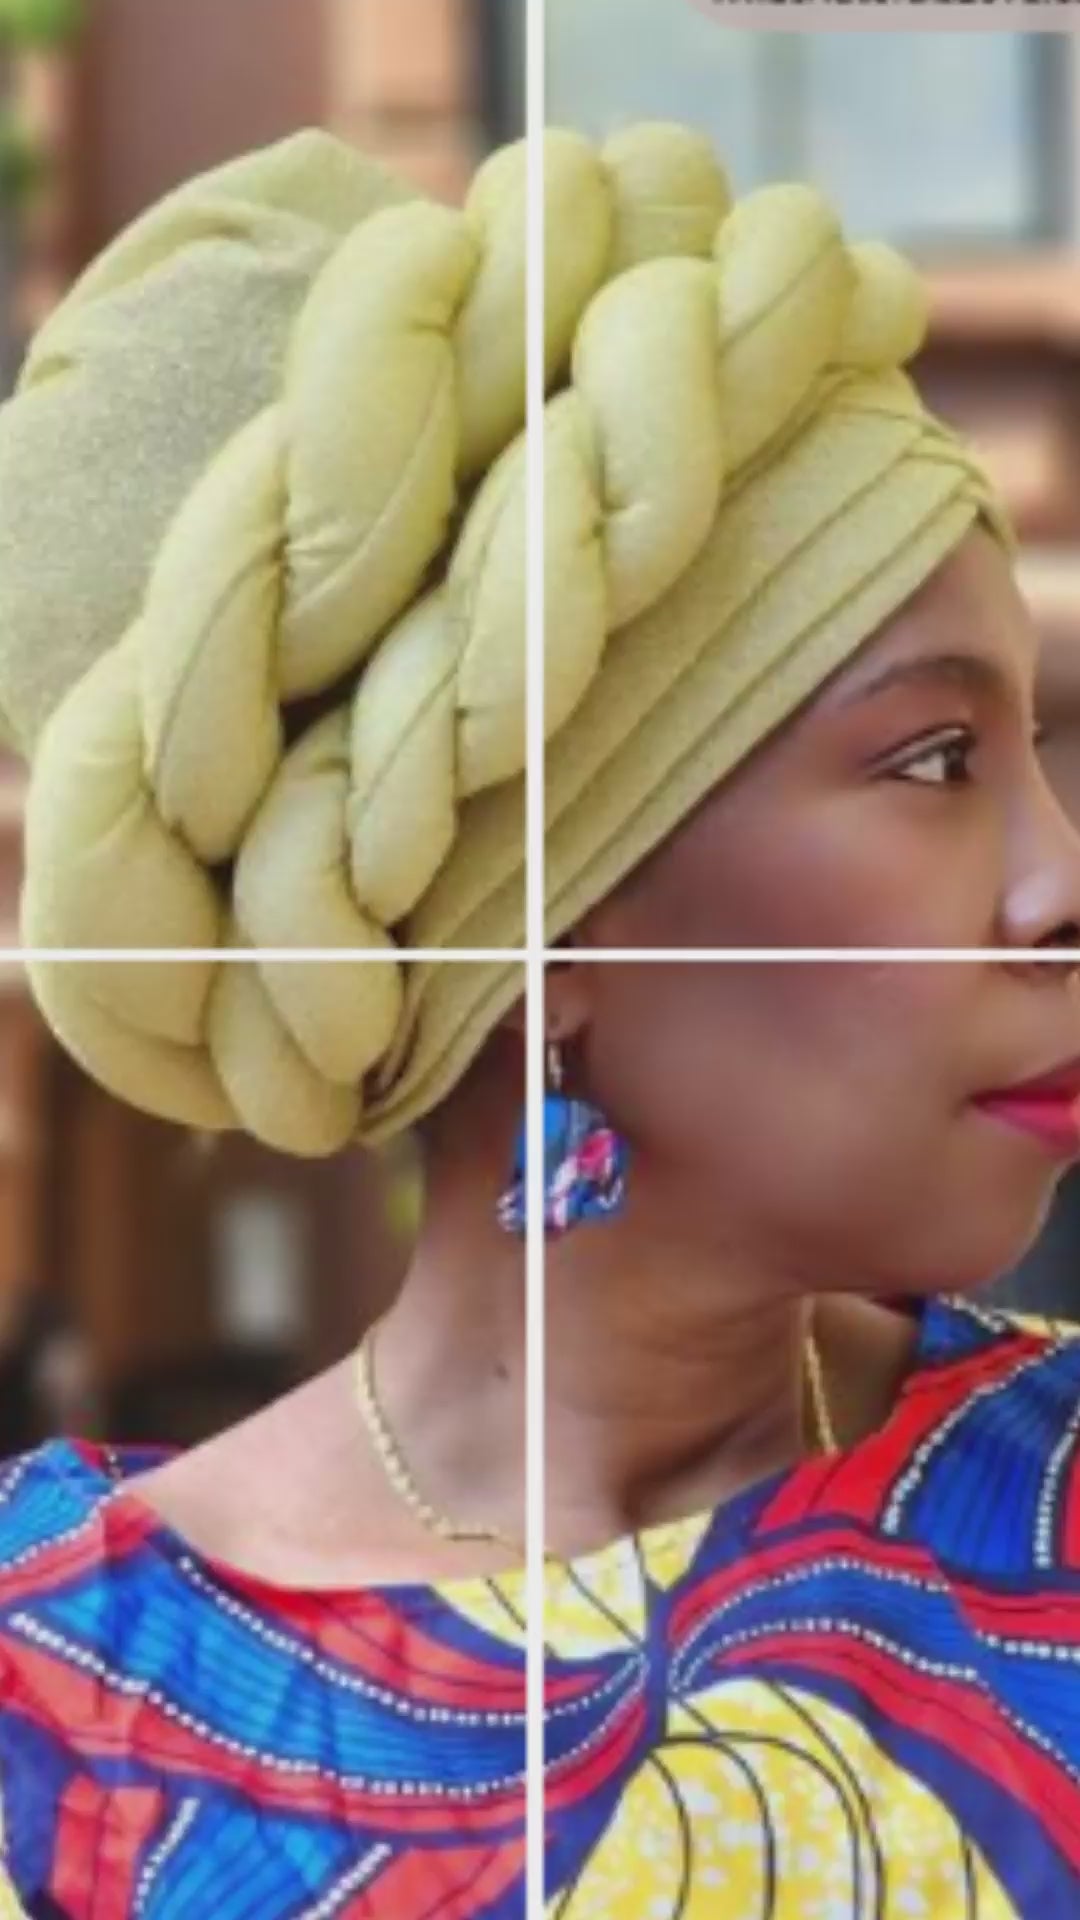 Prewrapped Nigerian inspired Gele Headwrap